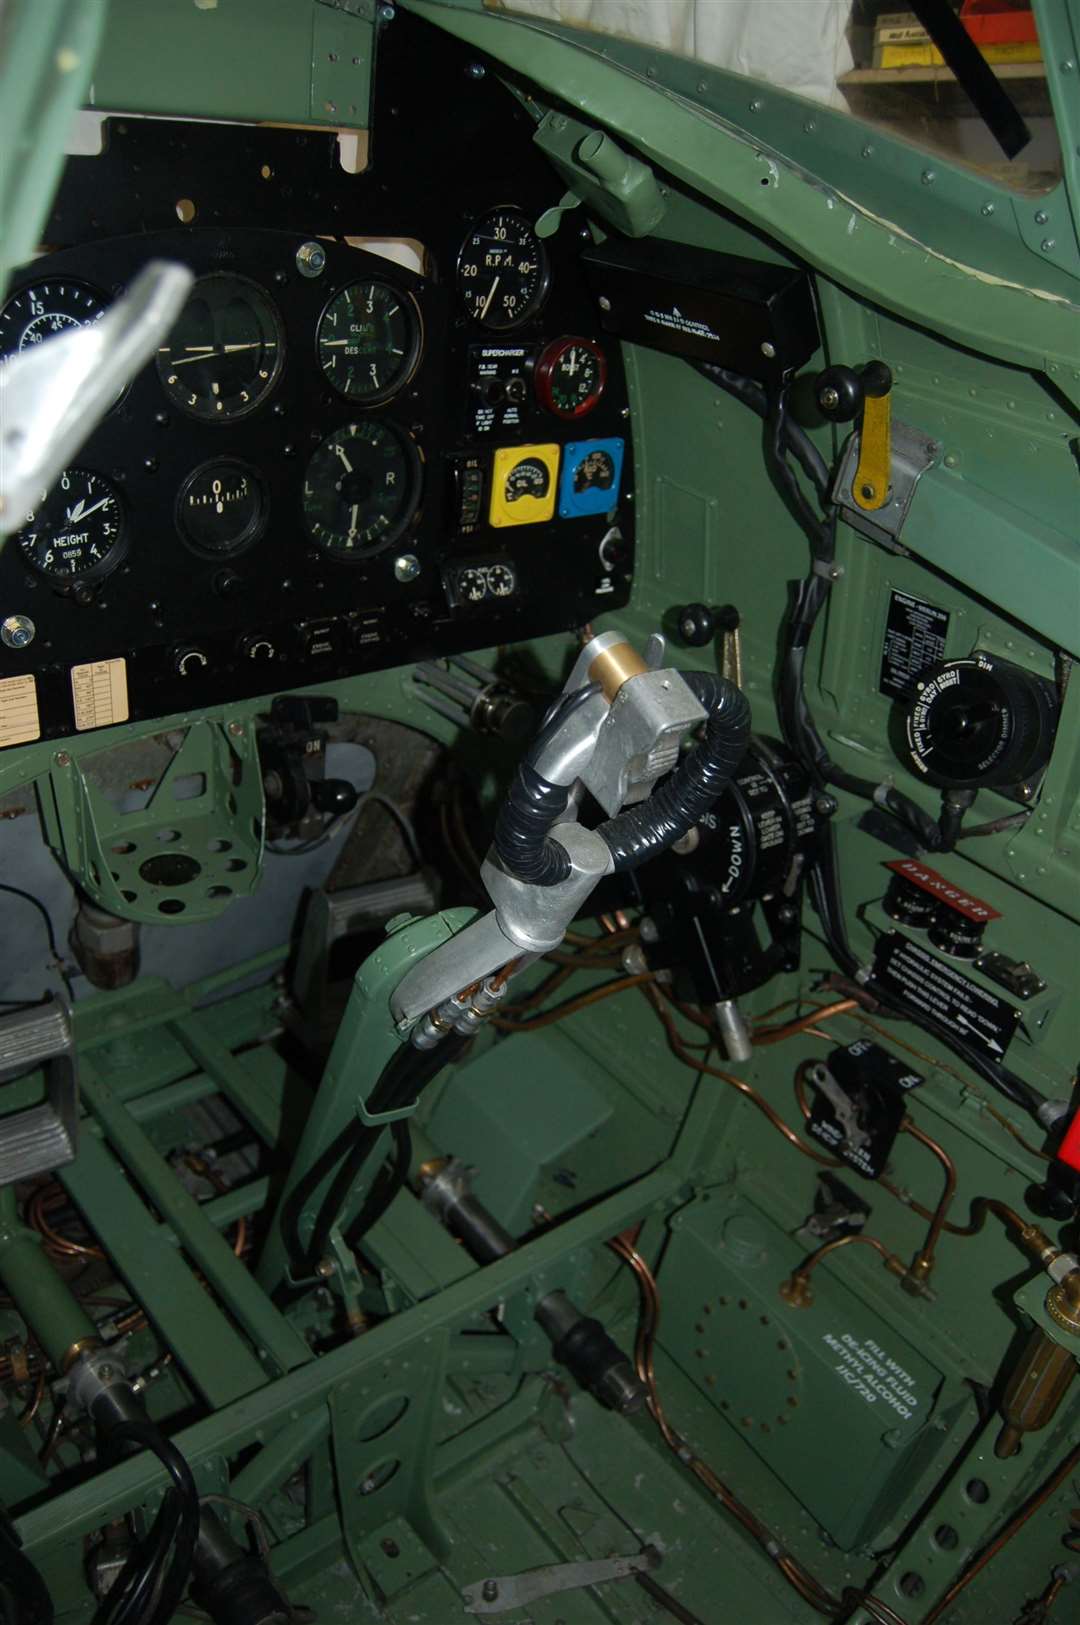 Inside the cockpit of the restored Spitfire